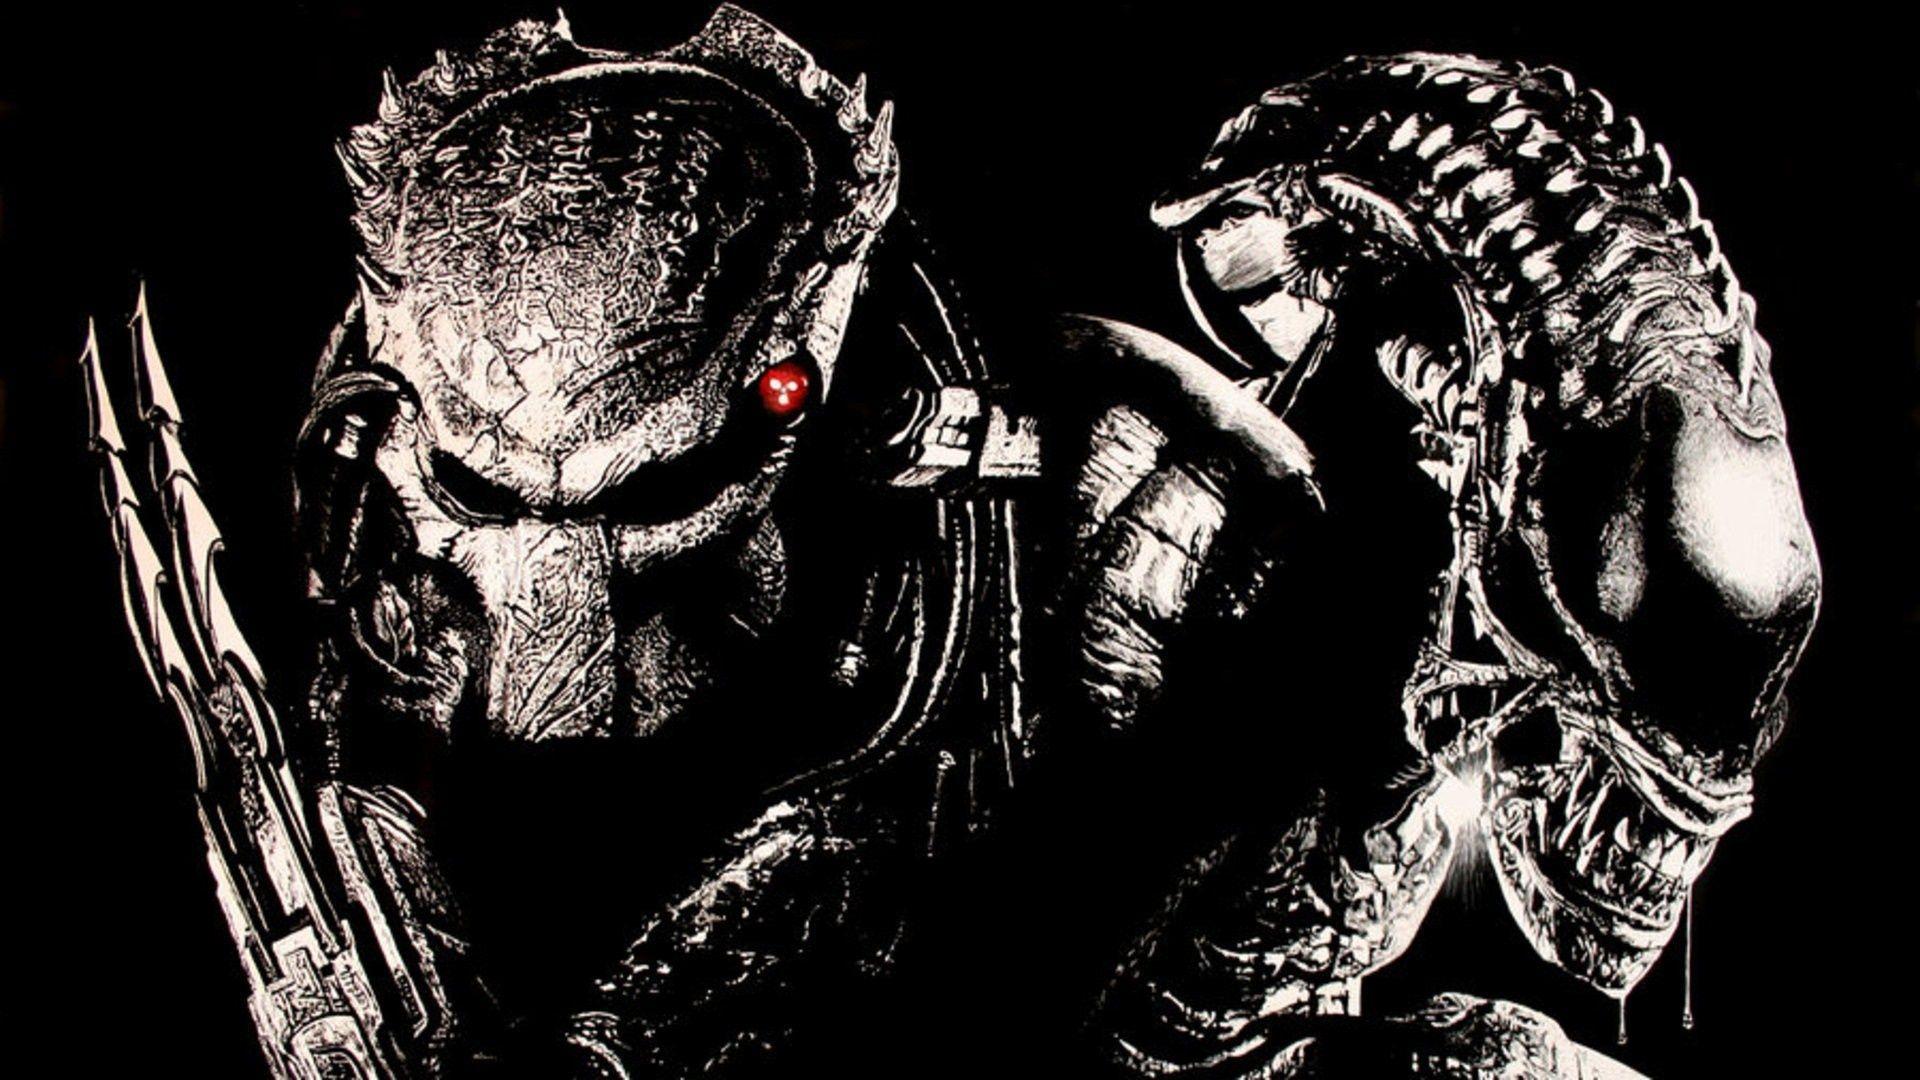 Alien Vs Predator Wallpapers Top Free Alien Vs Predator Images, Photos, Reviews